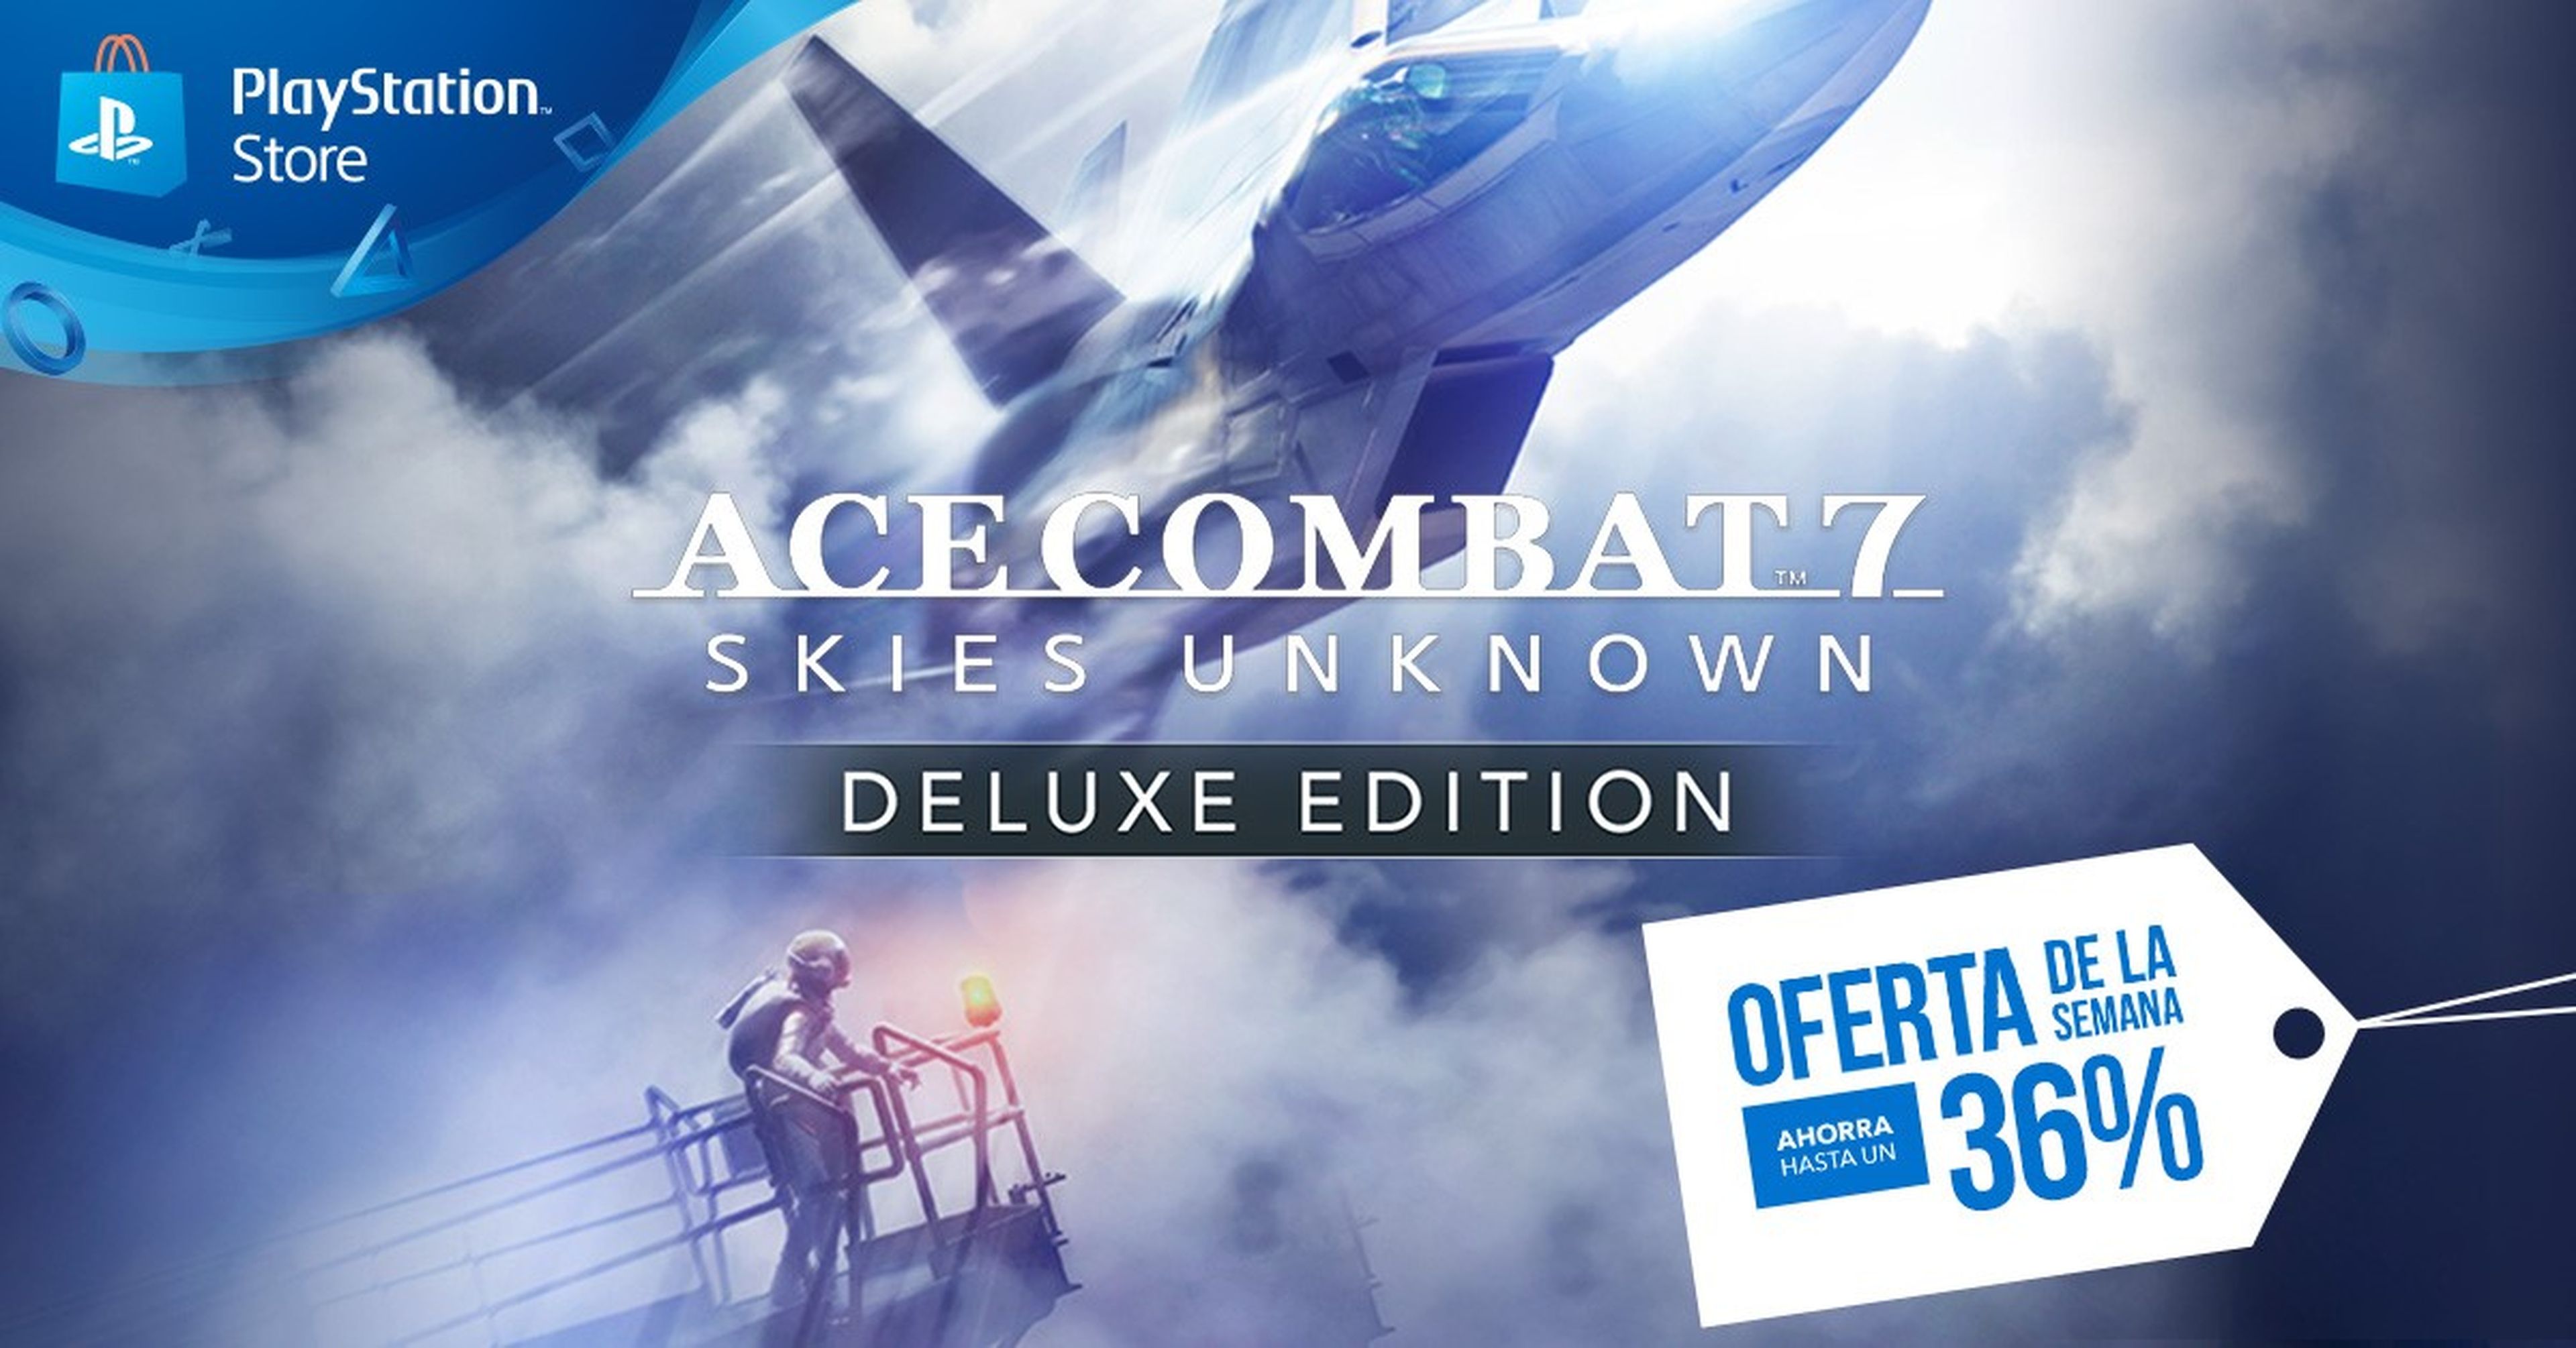 Ace Combat 7 rebaja